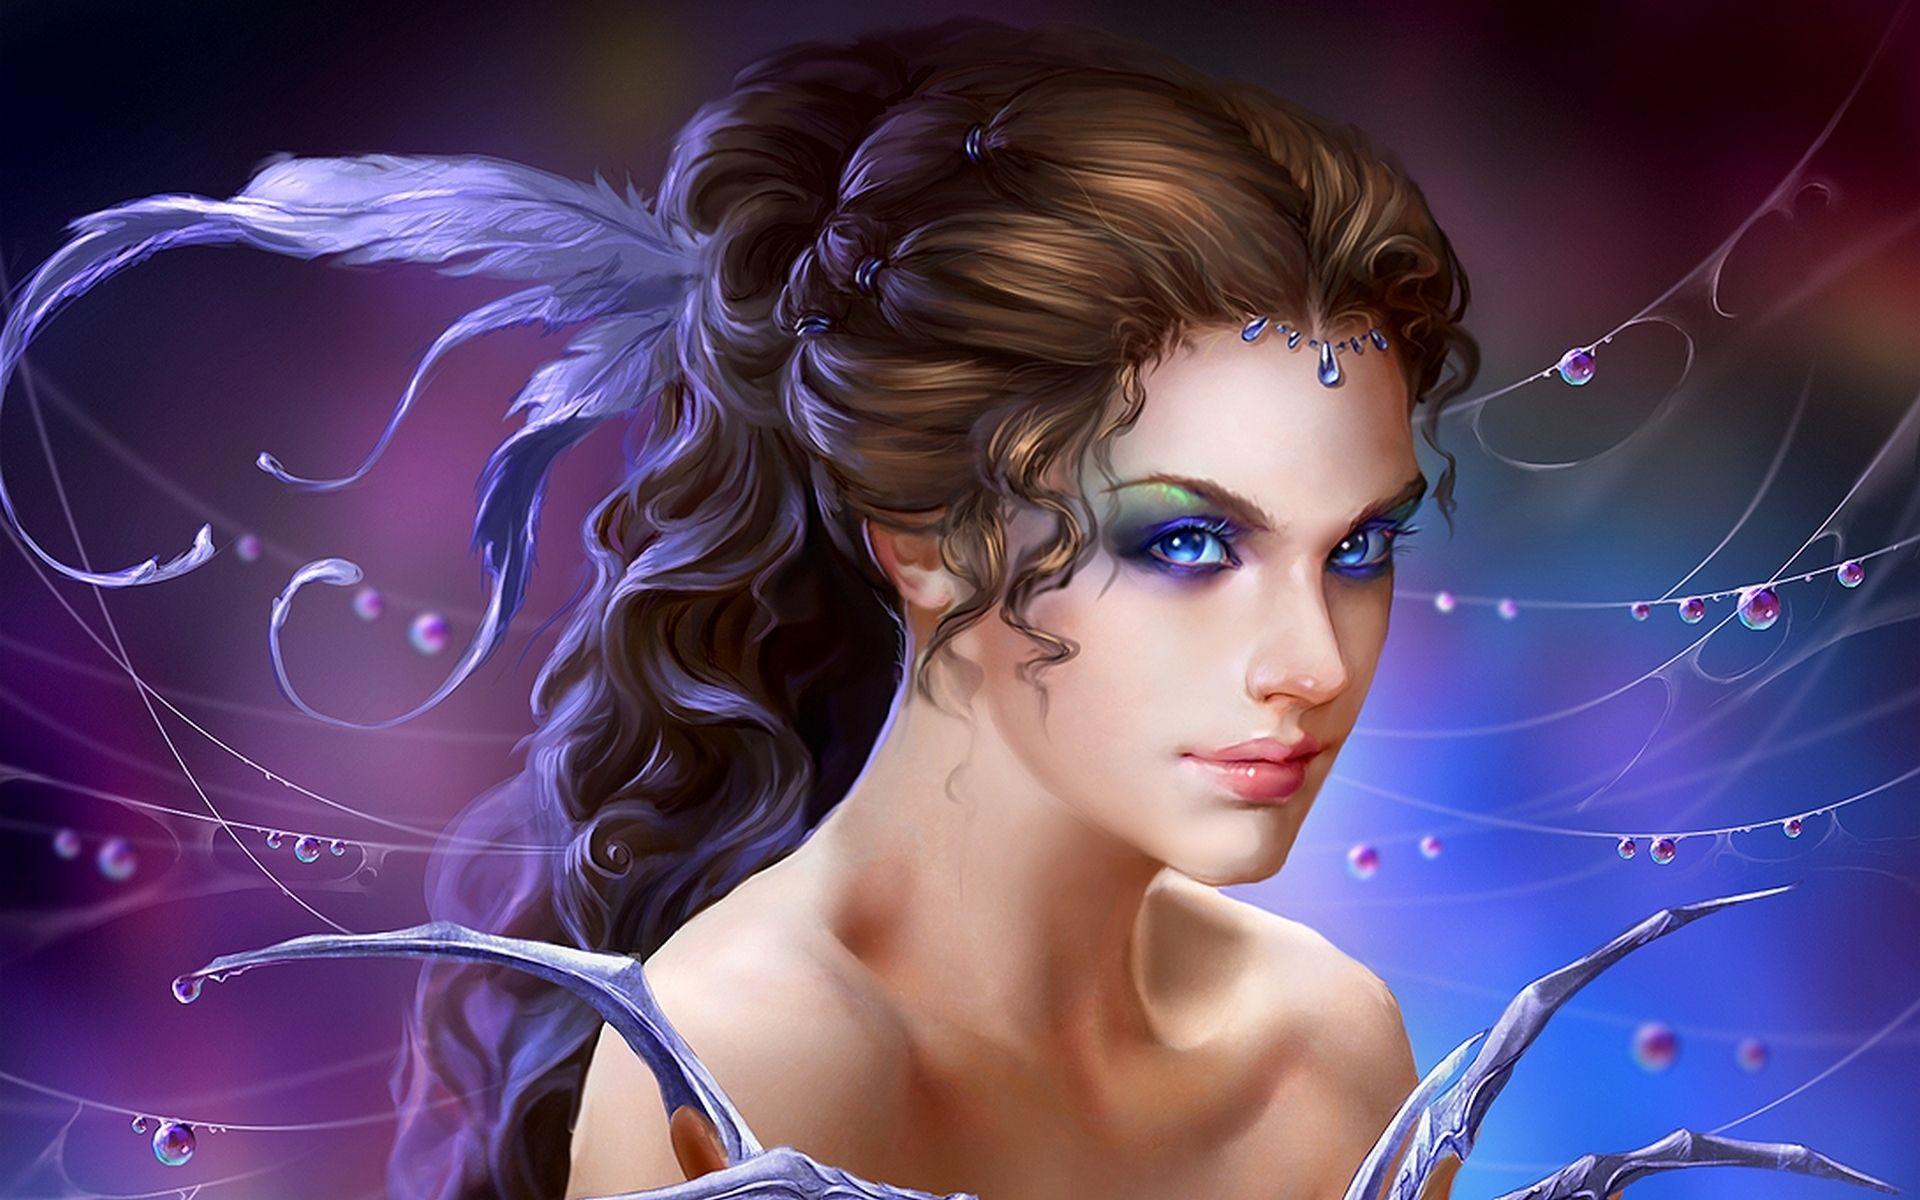 Beautiful Fantasy Fairy Picture. Cute Girl Fantasy 3D Wallpaper